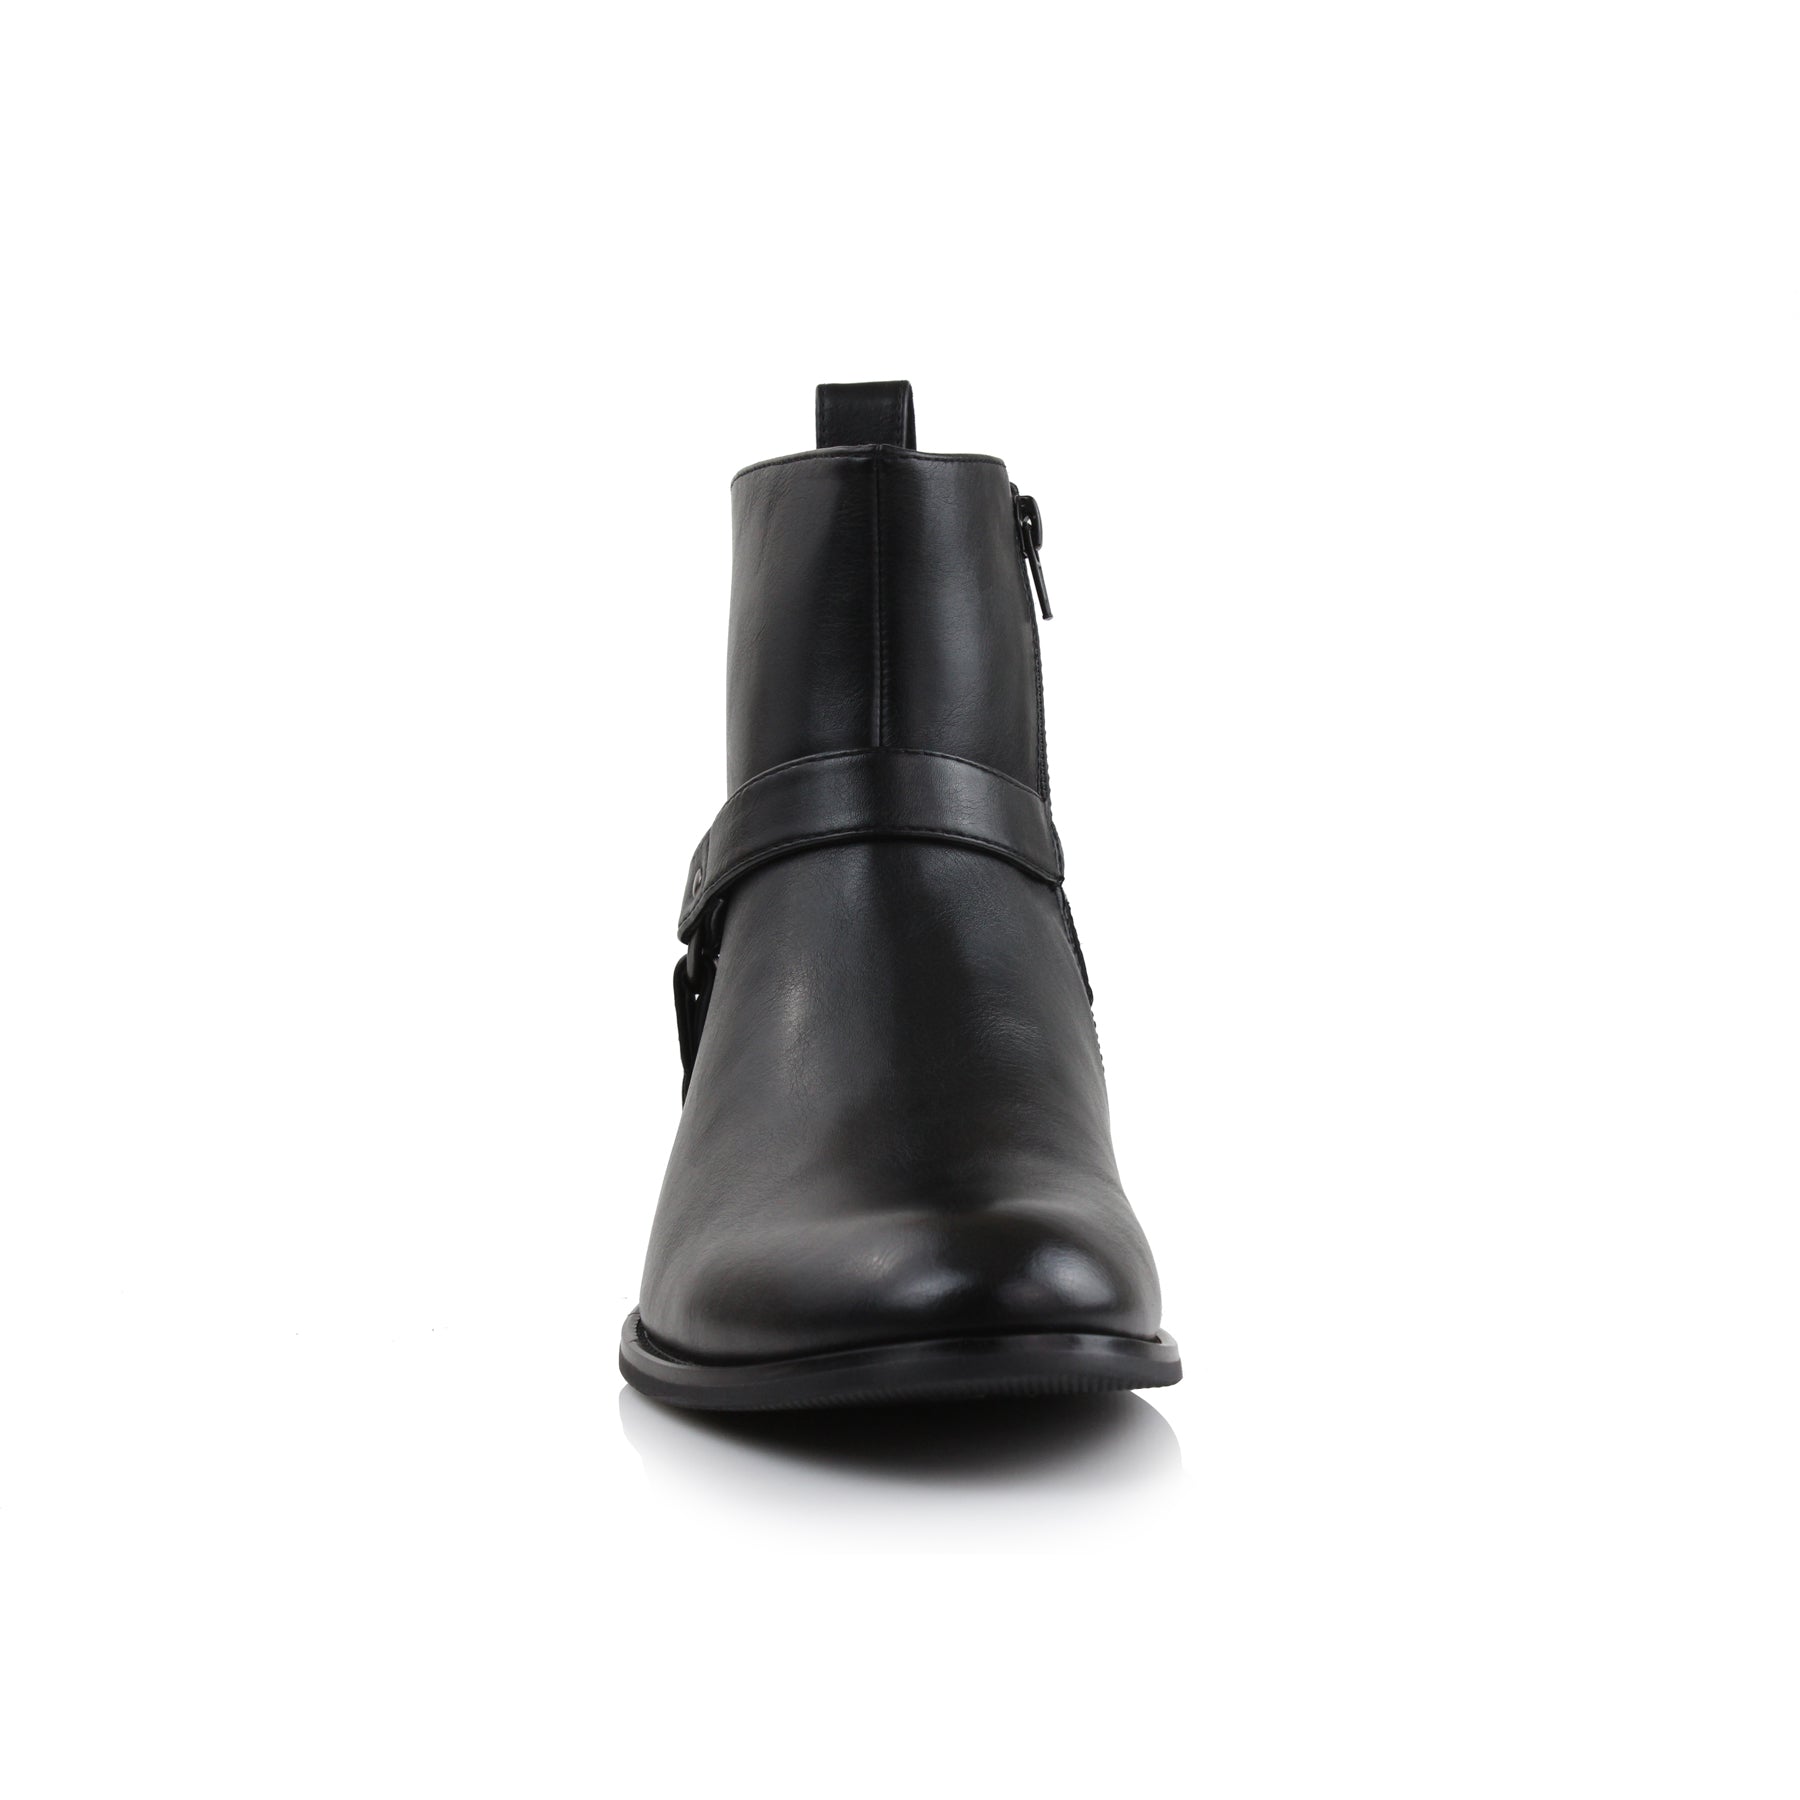 Modern Western Ankle Boots | Rhett by Polar Fox | Conal Footwear | Front Angle View